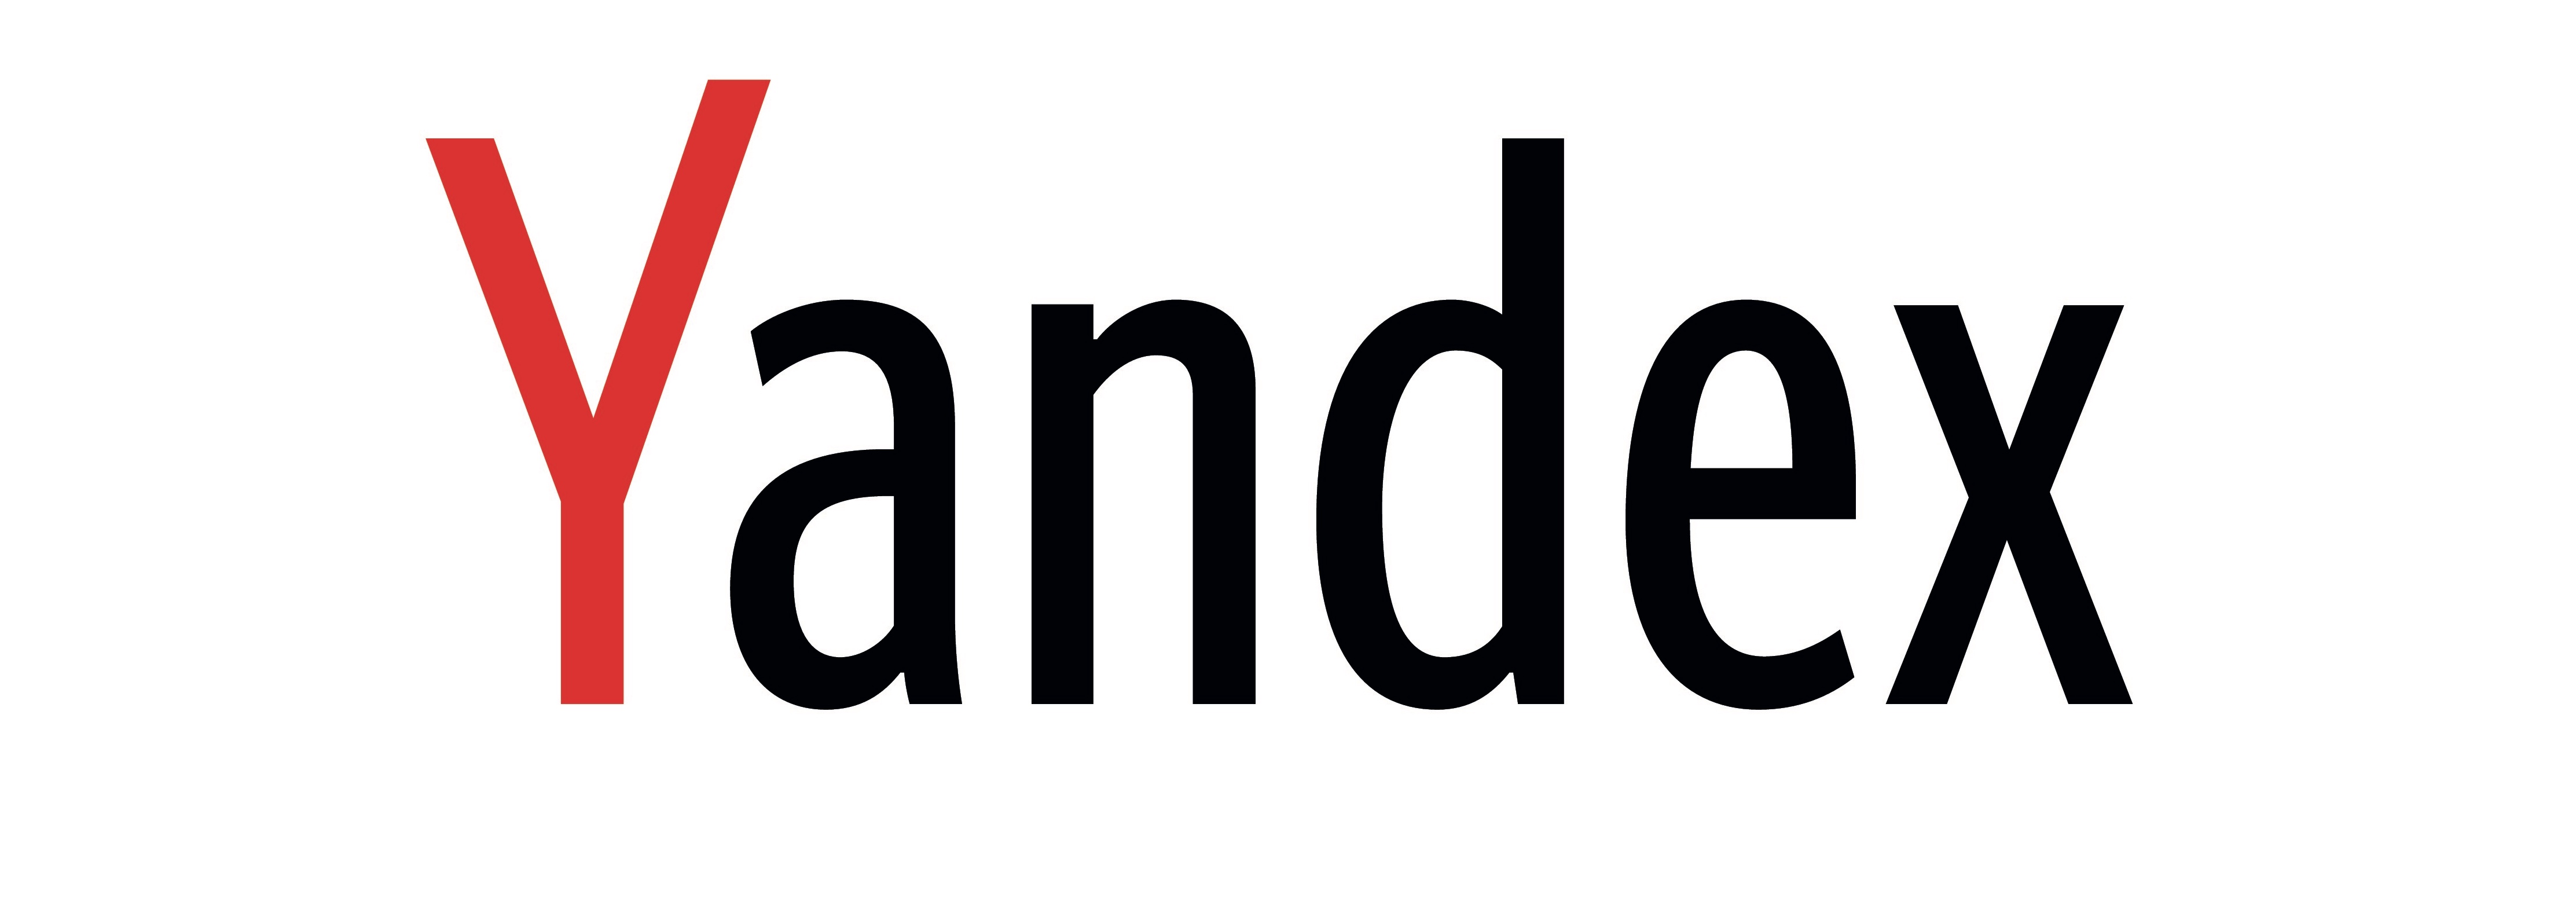 яндекс эмблема картинки